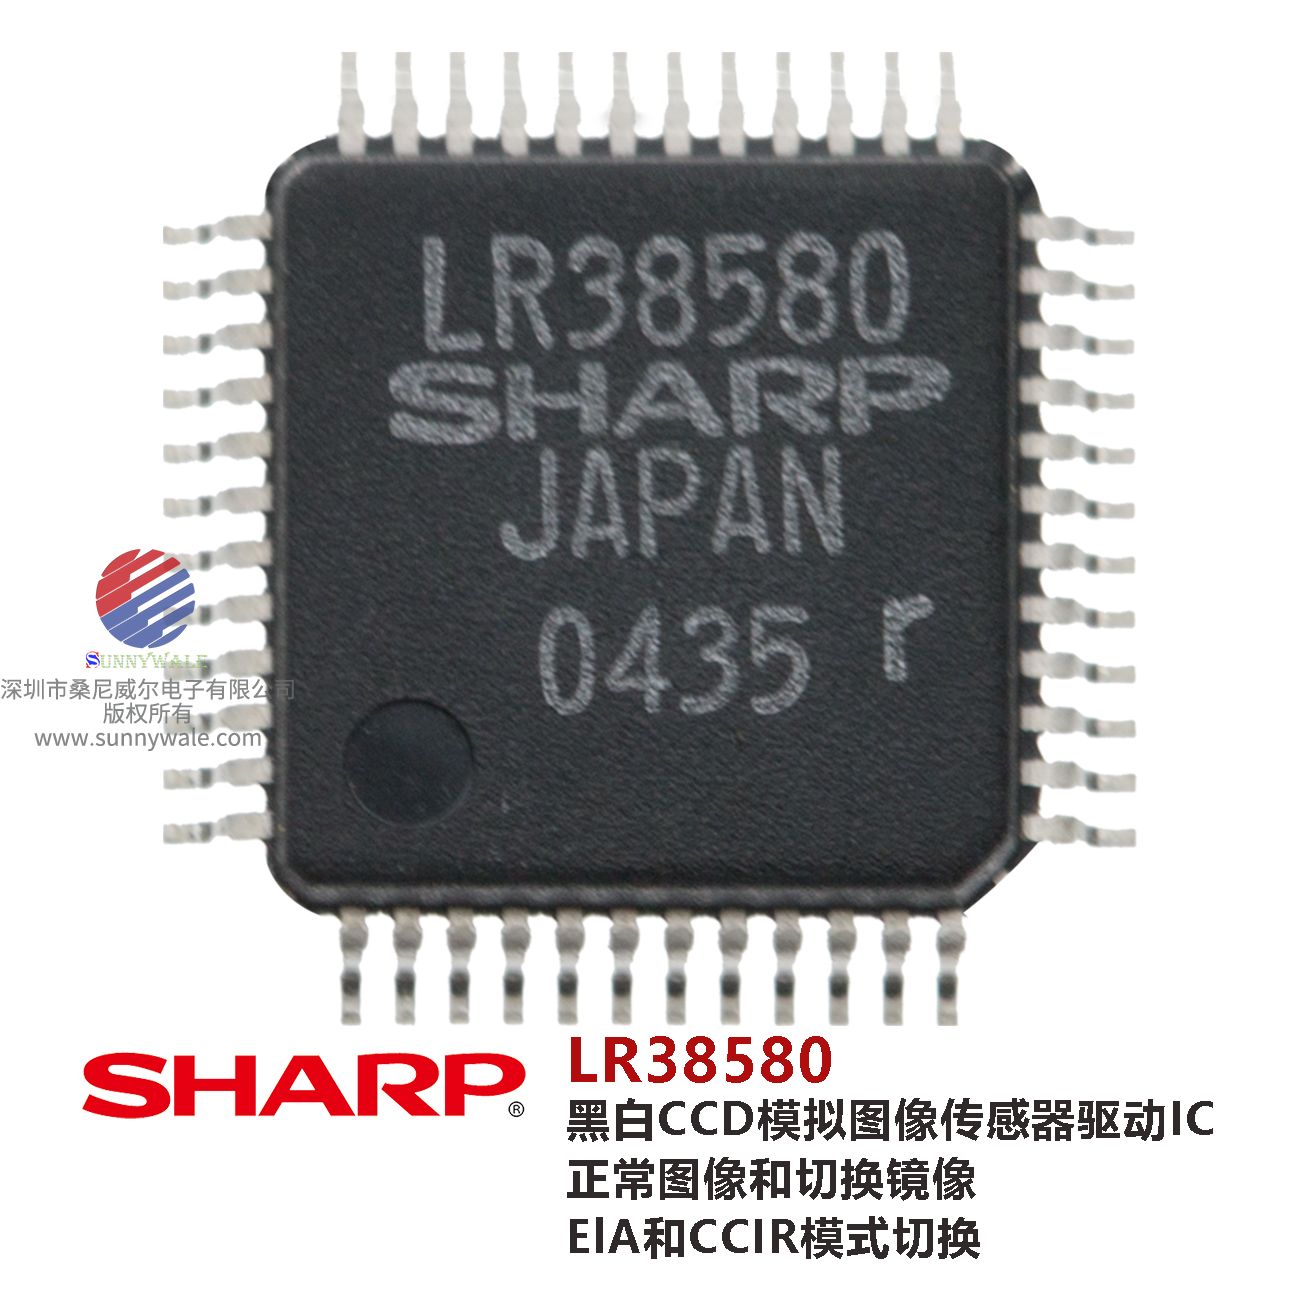 SHARP黑白CCD驱动单片机，夏普ccd驱动IC，黑白ccd驱动IC，LR38580现货，价格，高清图片，规格书，代理商，技术支持，产品介绍，参数，方案商，分销商，经销商，LR38580库存